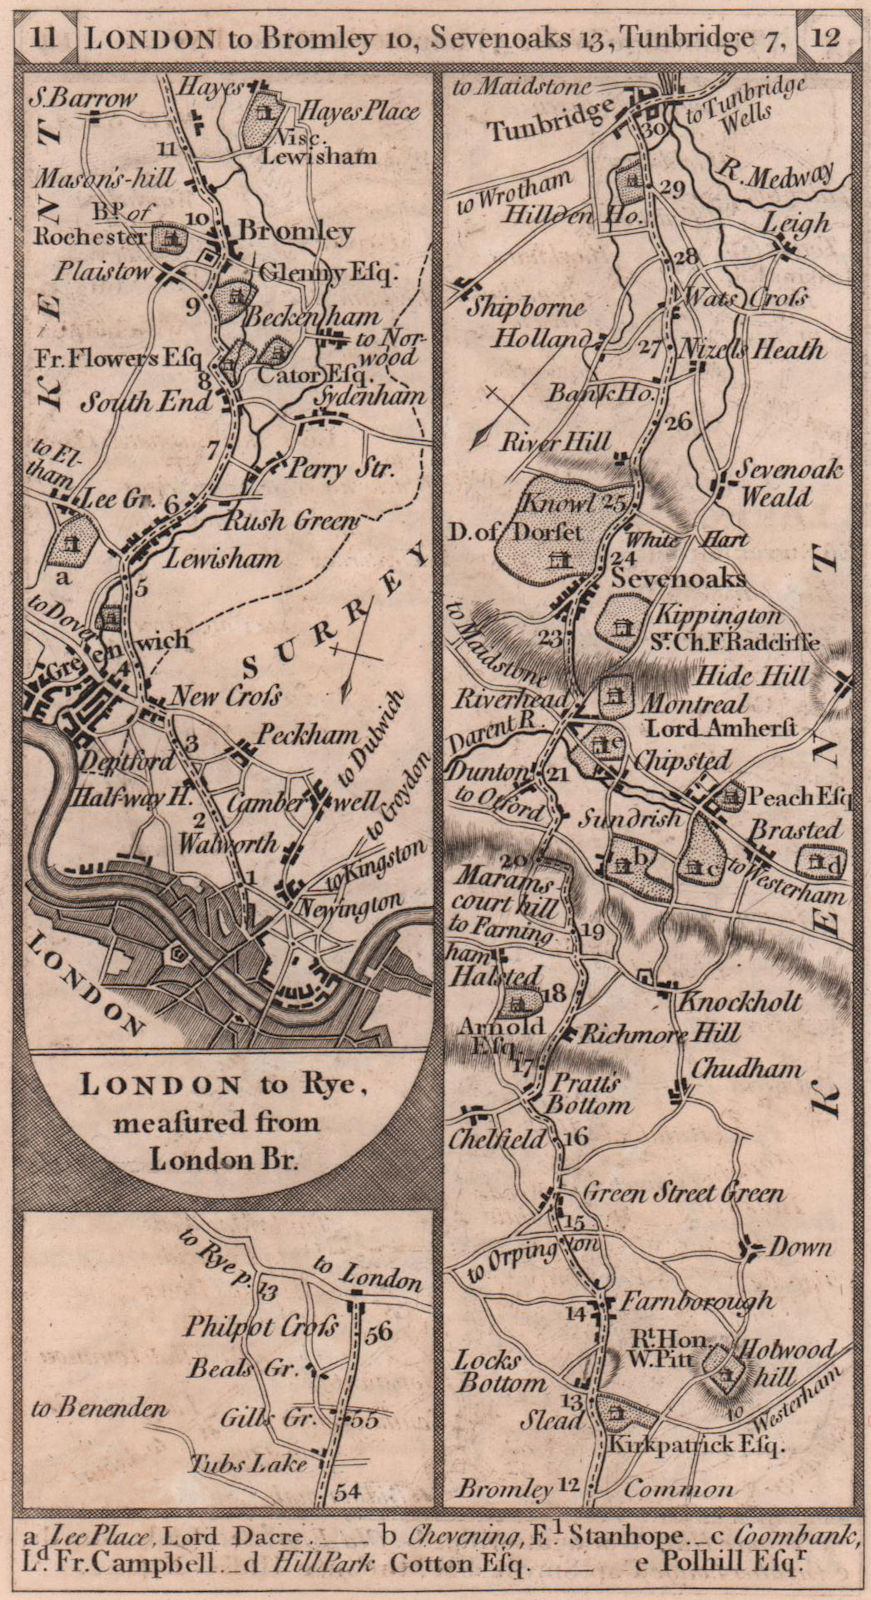 Greenwich-Lewisham-Bromley-Sevenoaks-Tunbridge road strip map PATERSON 1803